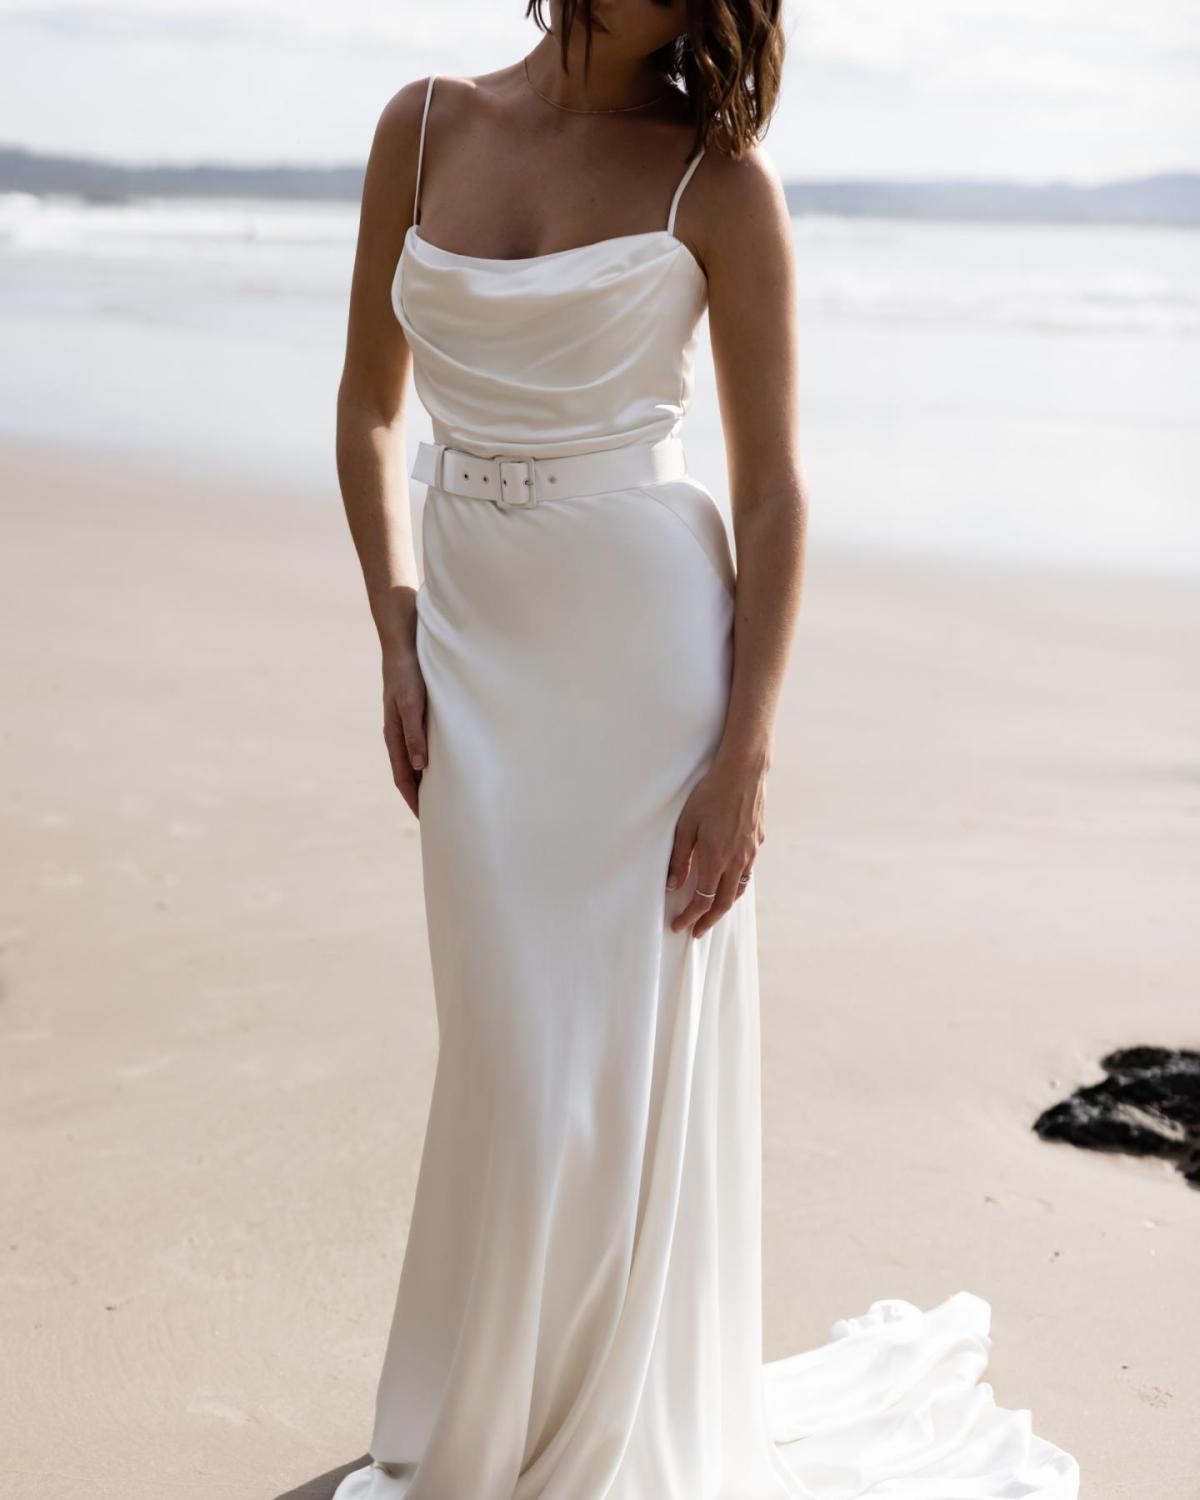 The Tiffany gown by Karen Willis Holmes, a straight neckline, simple satin wedding dress with spaghetti straps.